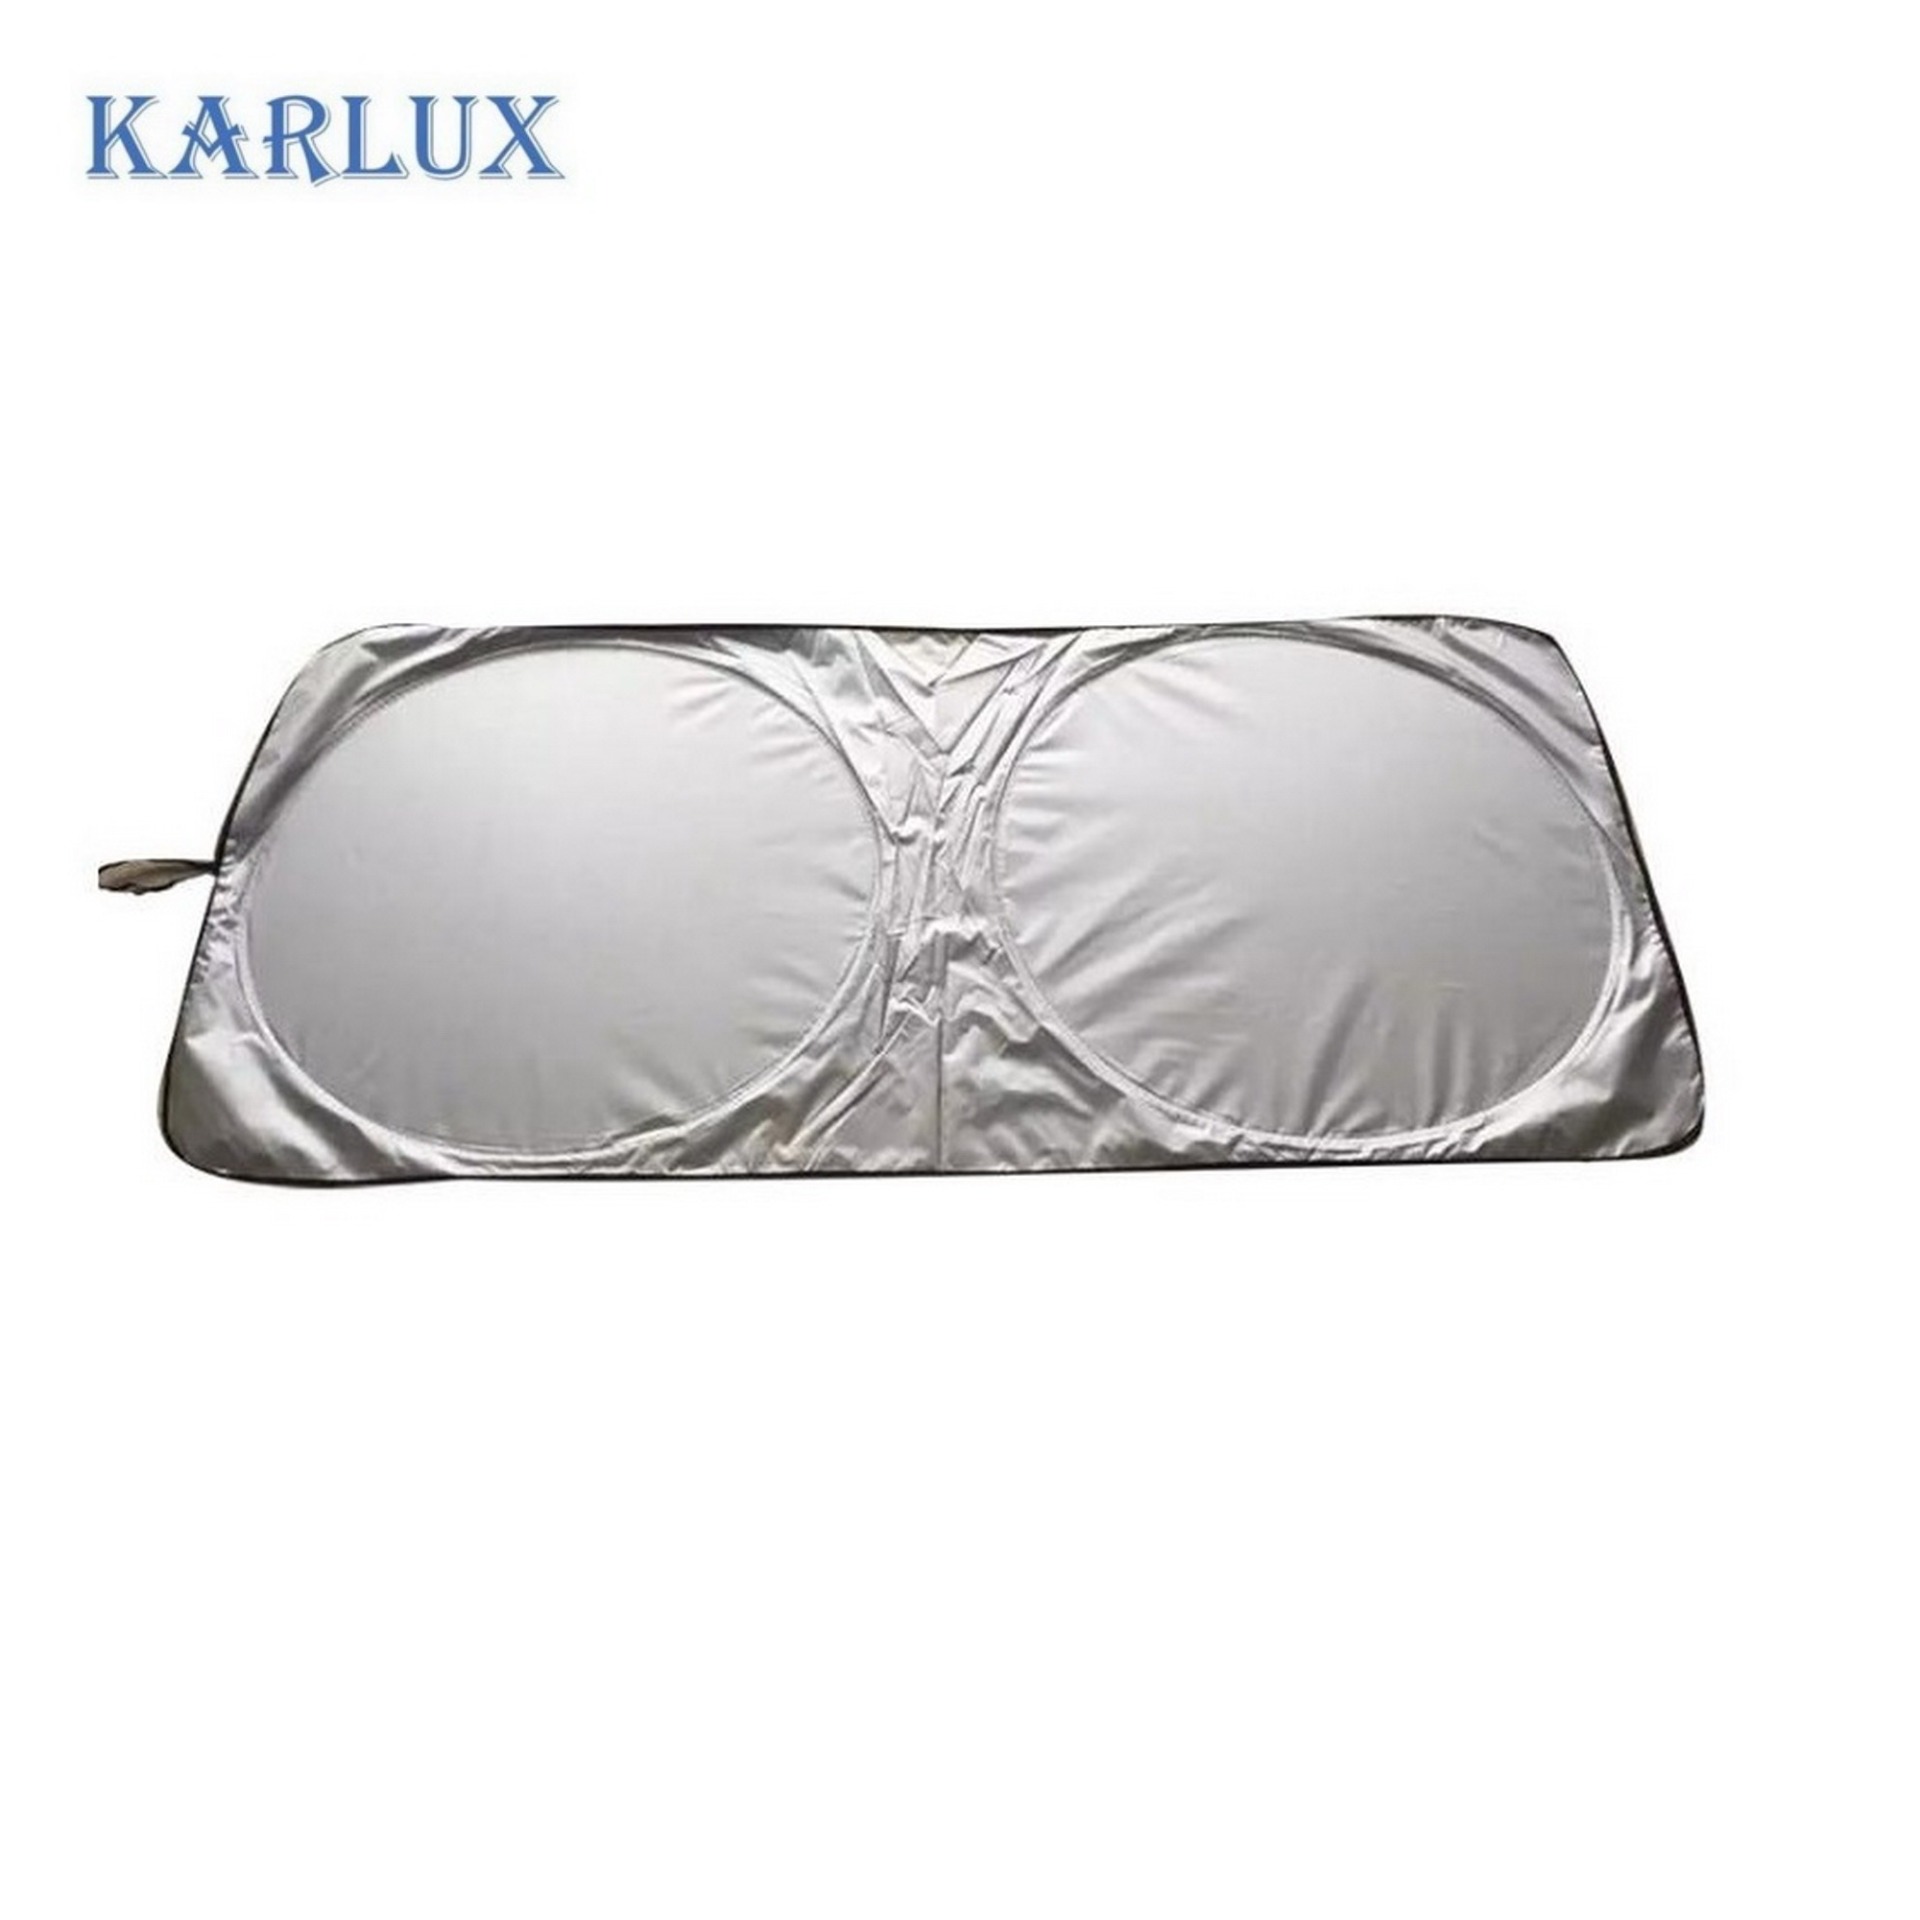 Karlux ม่านบังแดดรถยนต์หน้ารถ จำนวน 1ชิ้น Front Car Sunshade Auto Sun Visor Folding